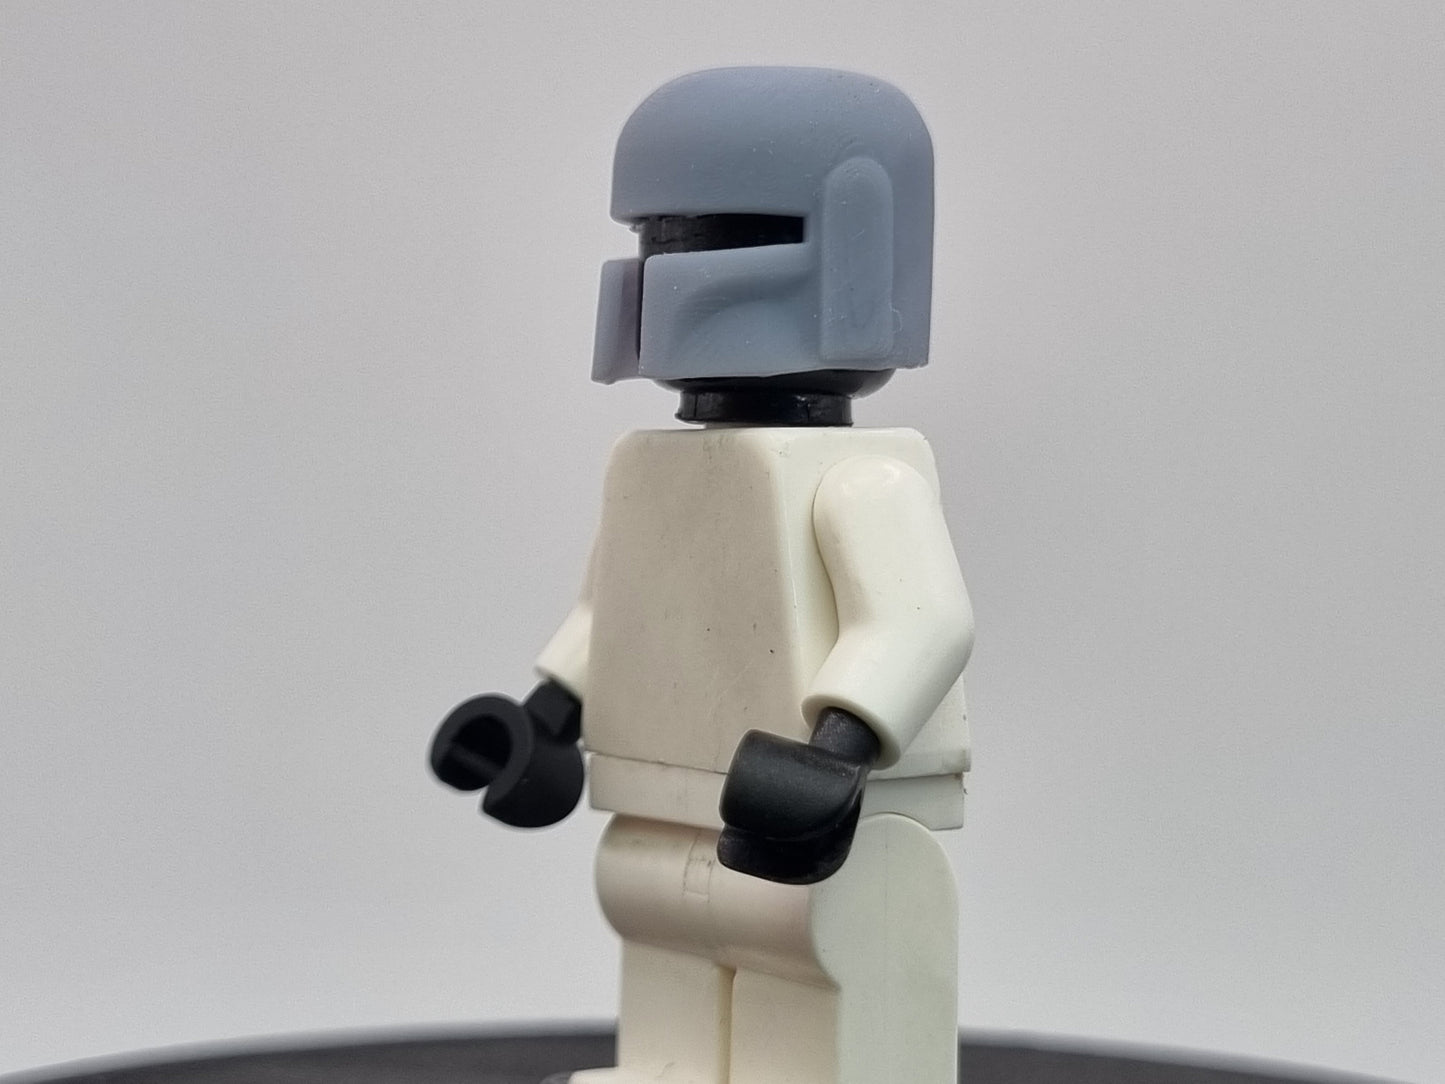 Building toy custom 3D printed galaxy wars classic bucket!